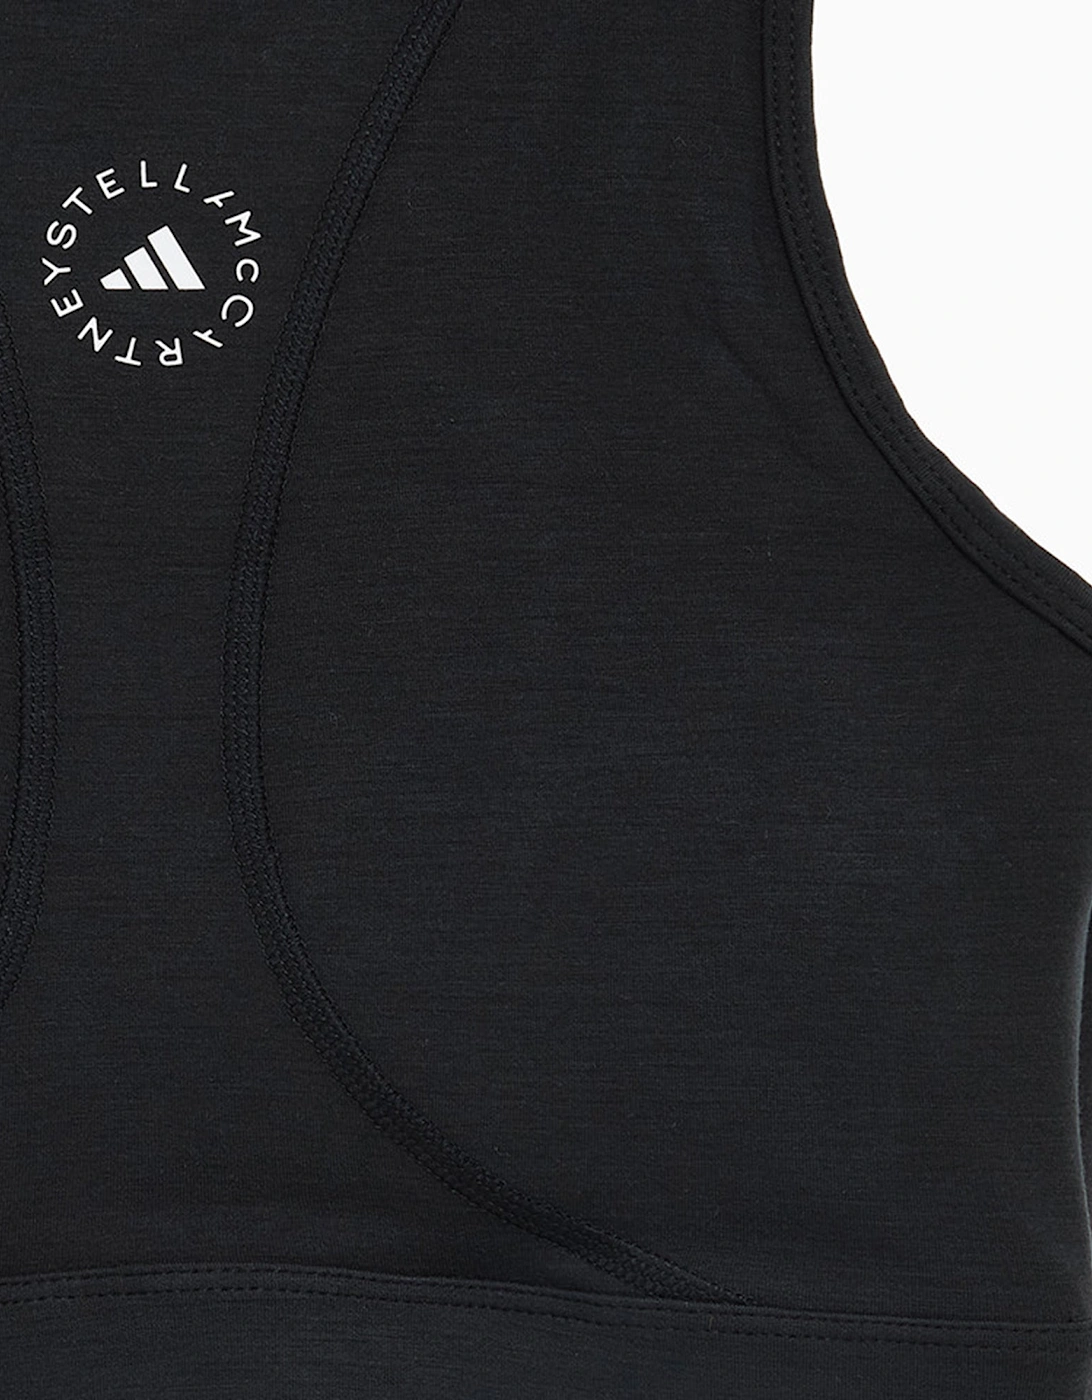 Adidas by Stella McCartney TrueStrength Yoga Crop Top Black